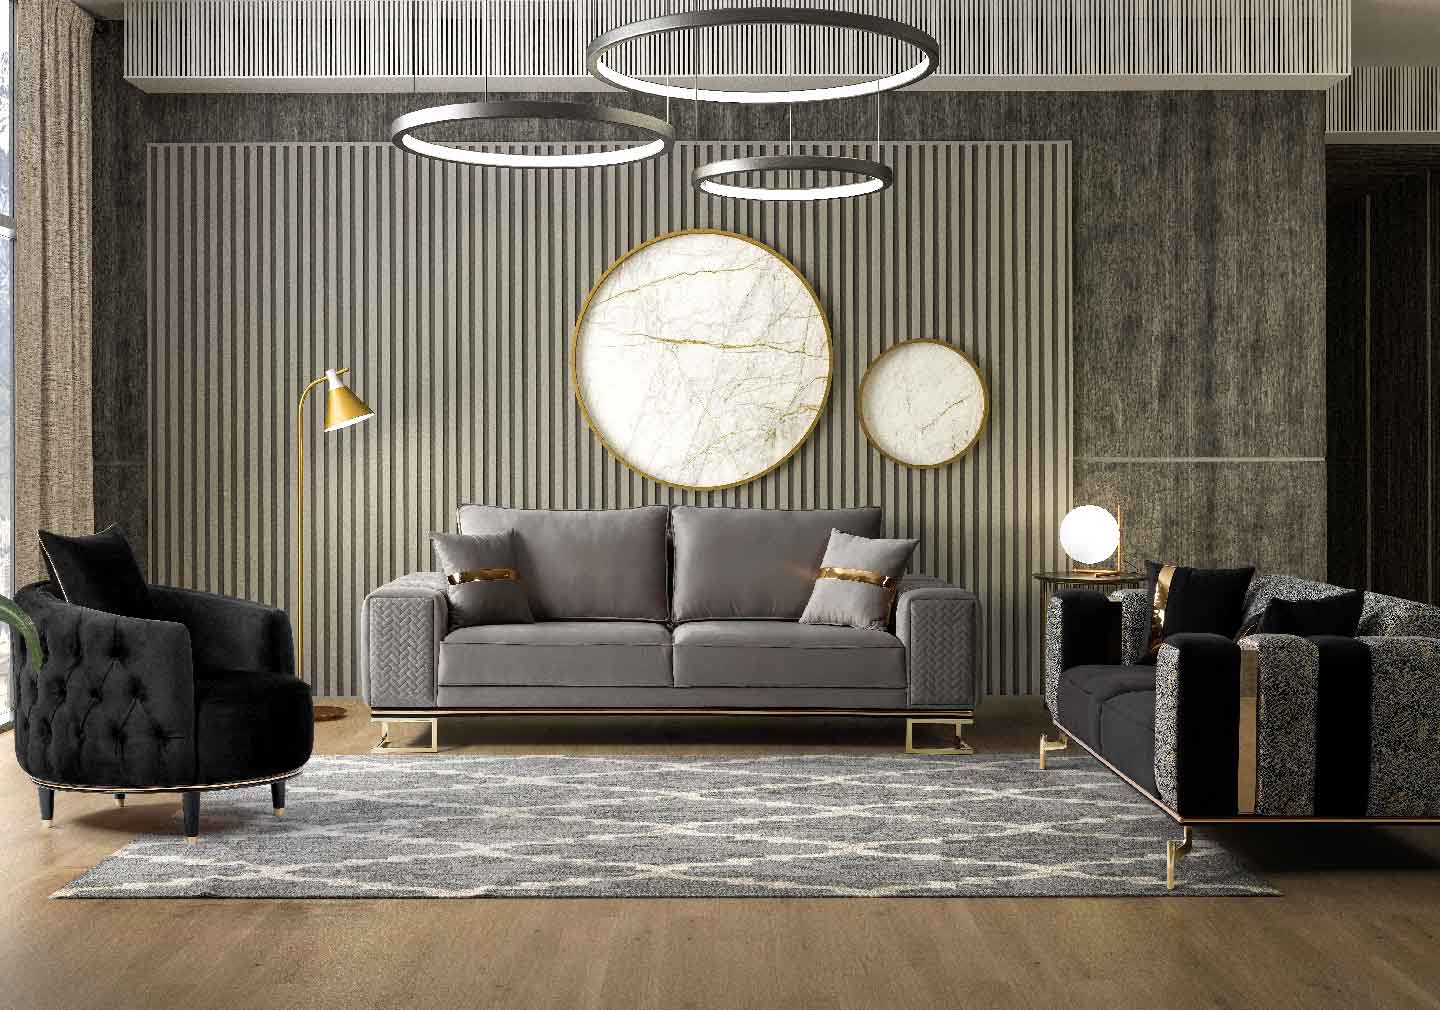 2BHK home interior design for living room with sofa